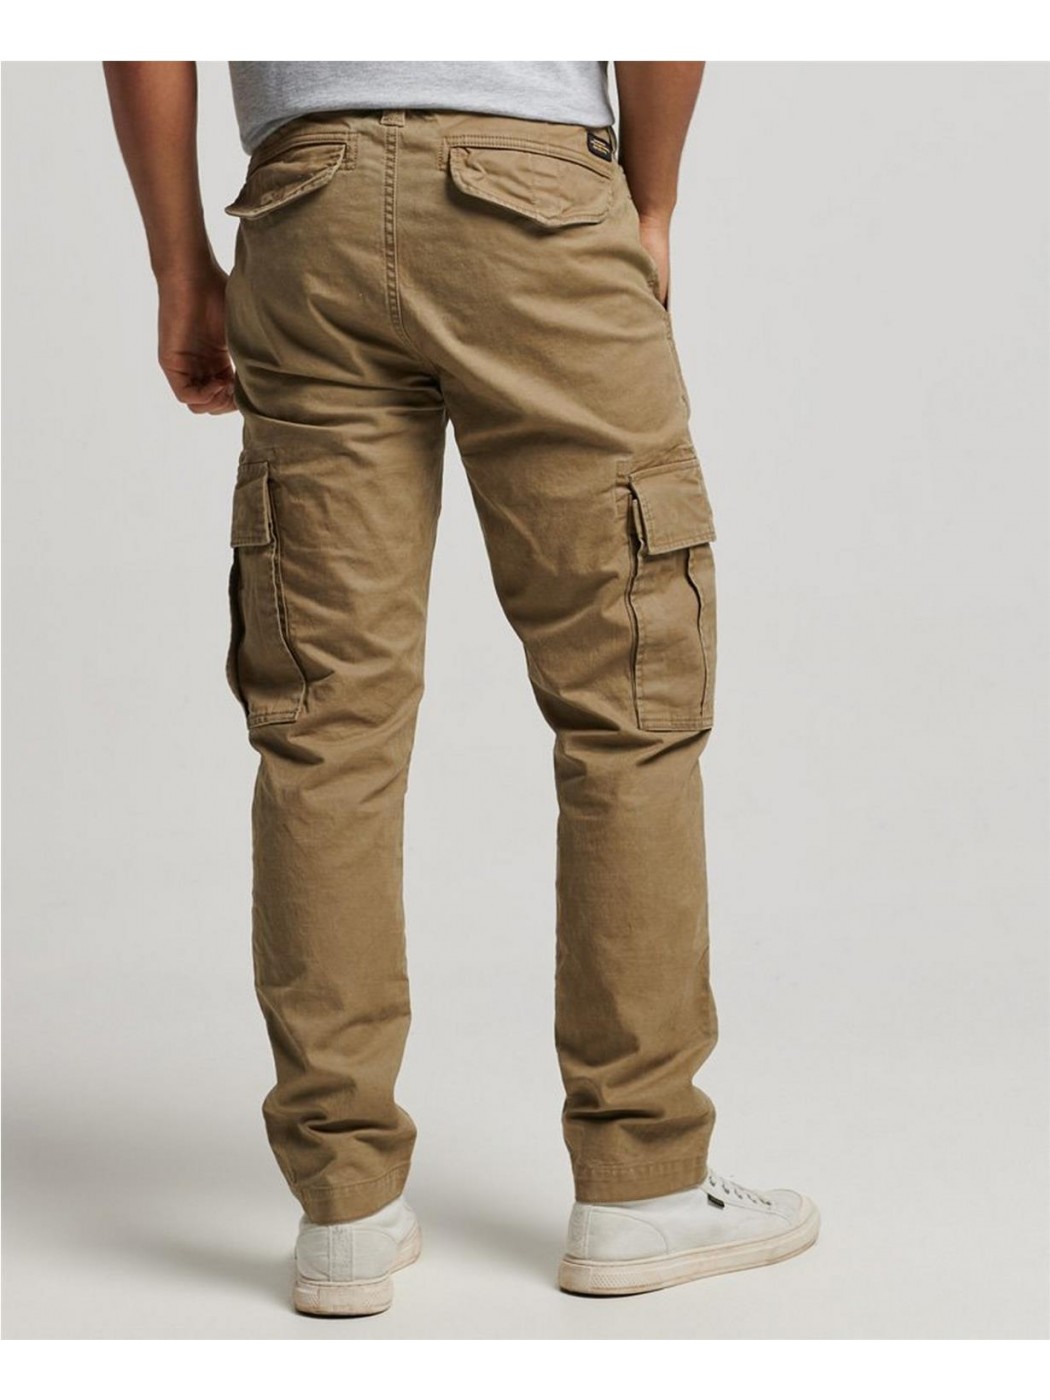 Pantalones Hombre Cargo